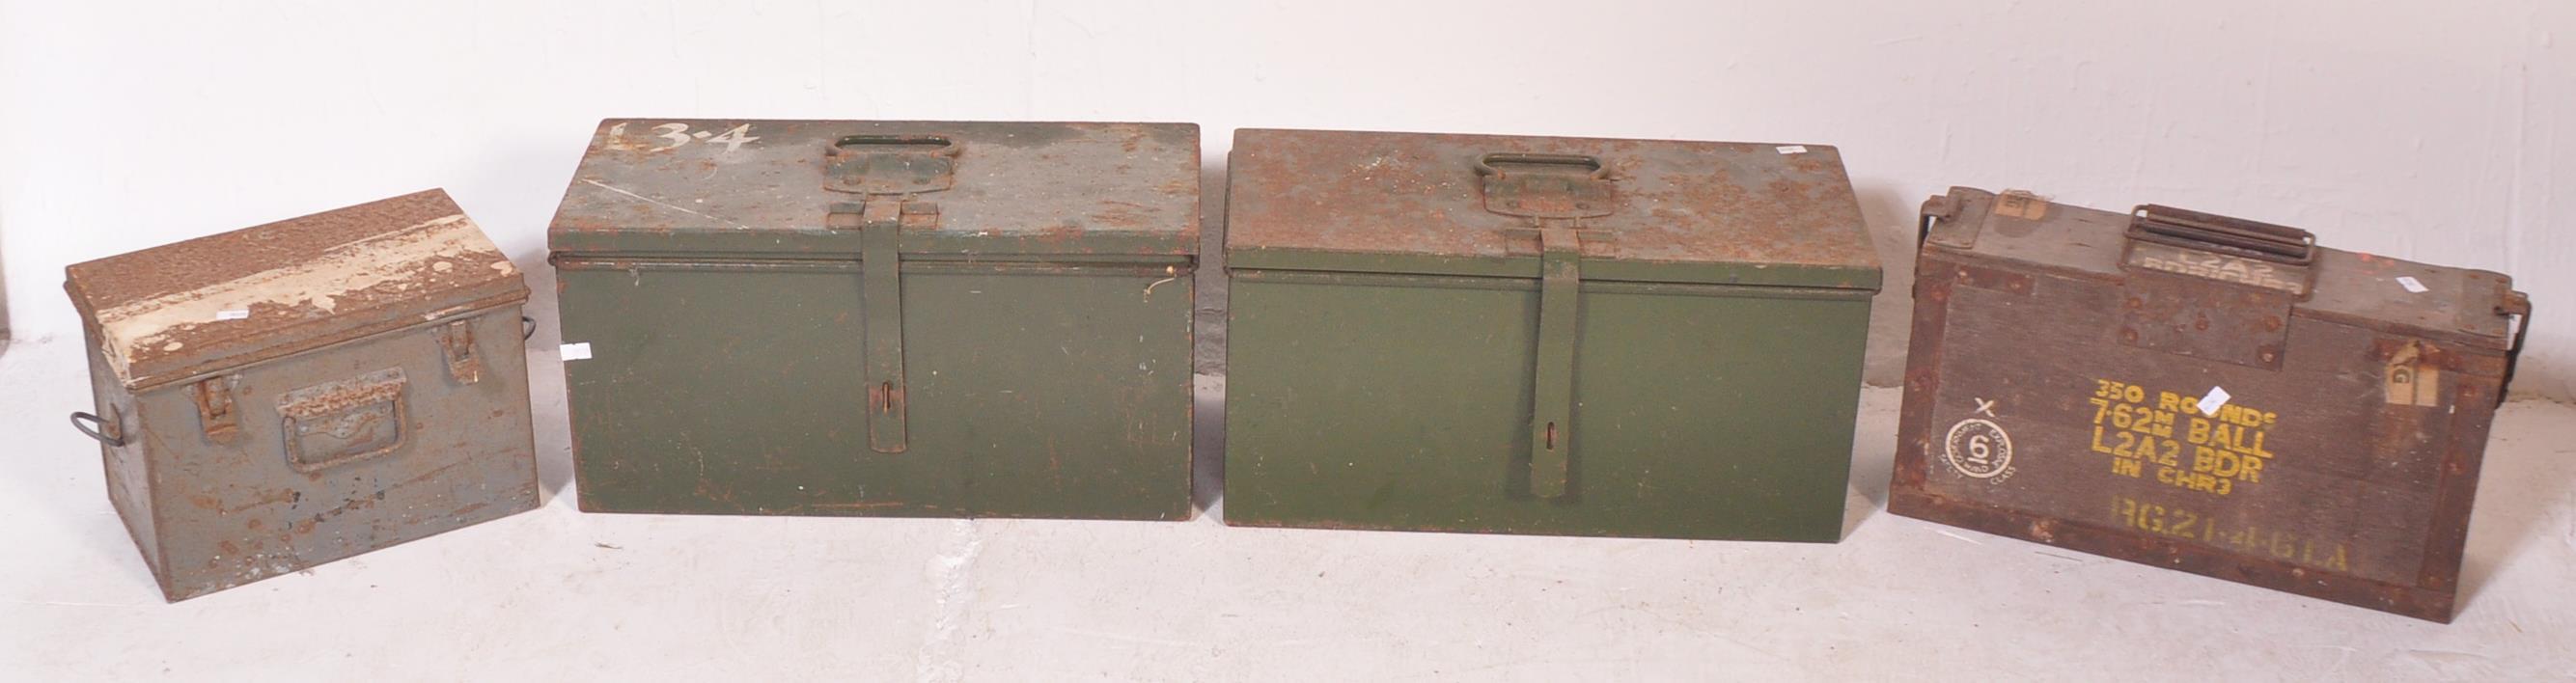 FOUR WORLD WAR II METAL AMMUNITION BOXES - Image 2 of 6